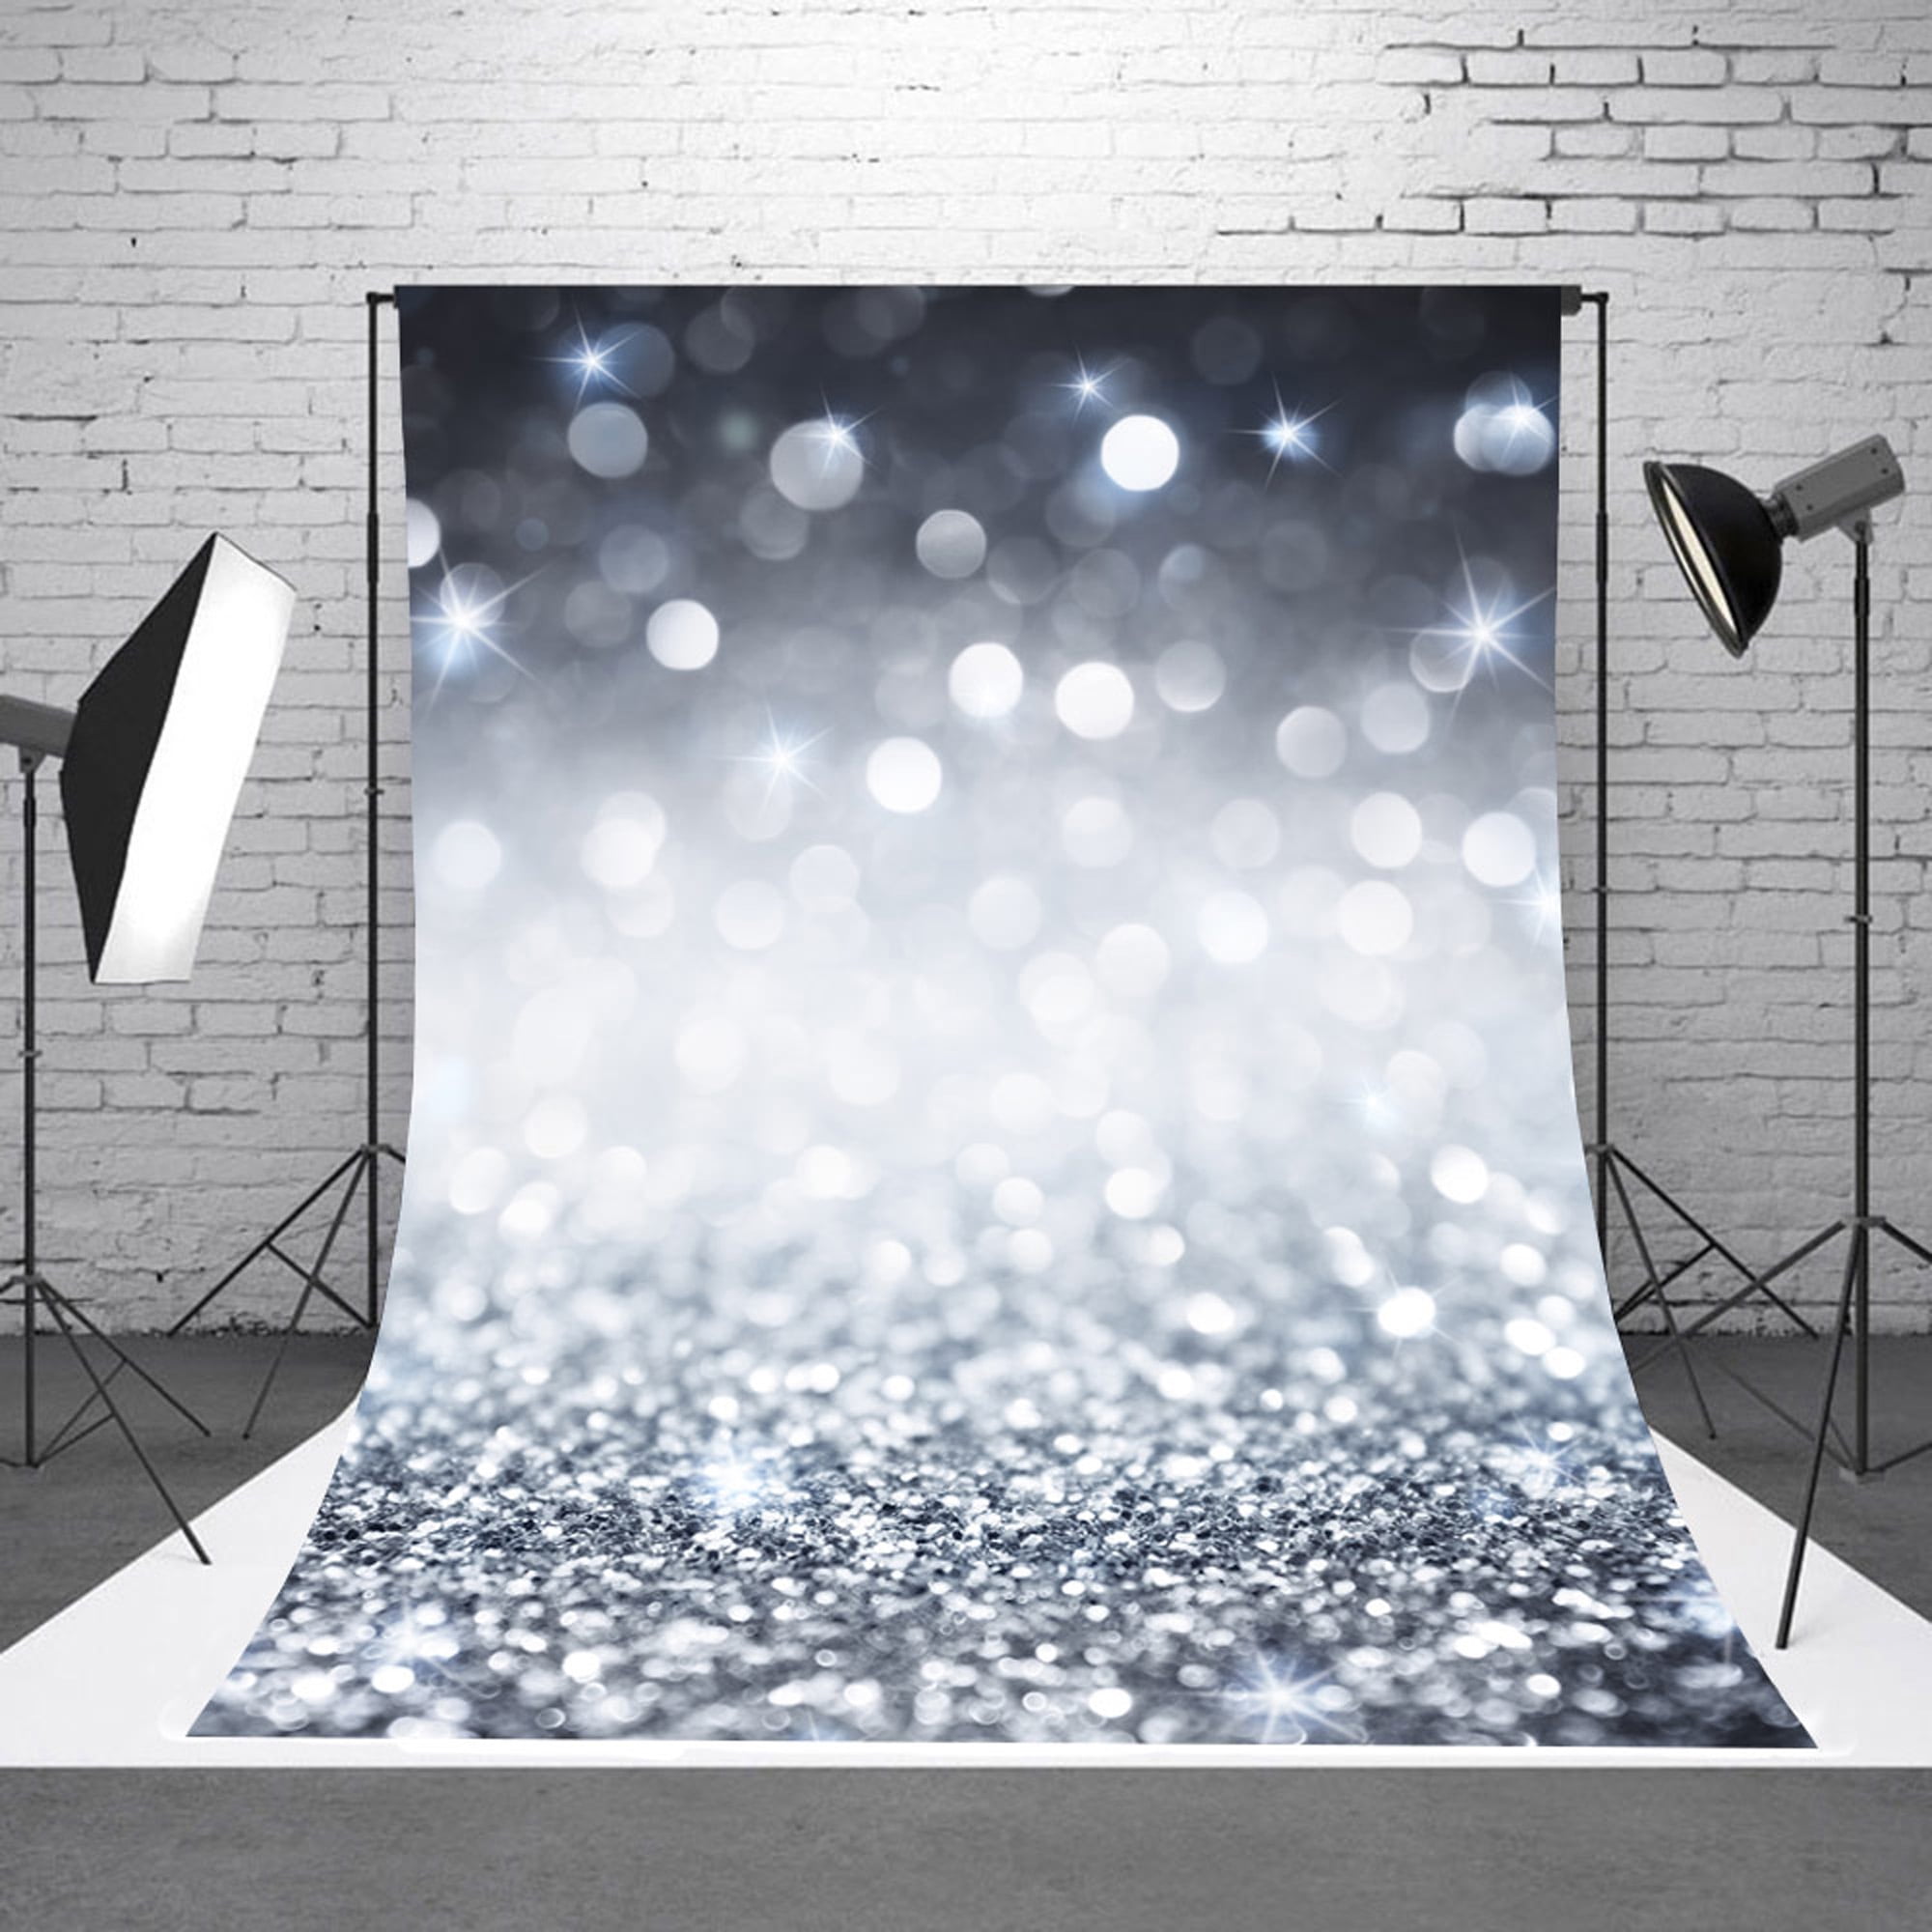 Balsa Circle Black 8 ft x 10 ft Photo Backdrop Stand Kit - Studio